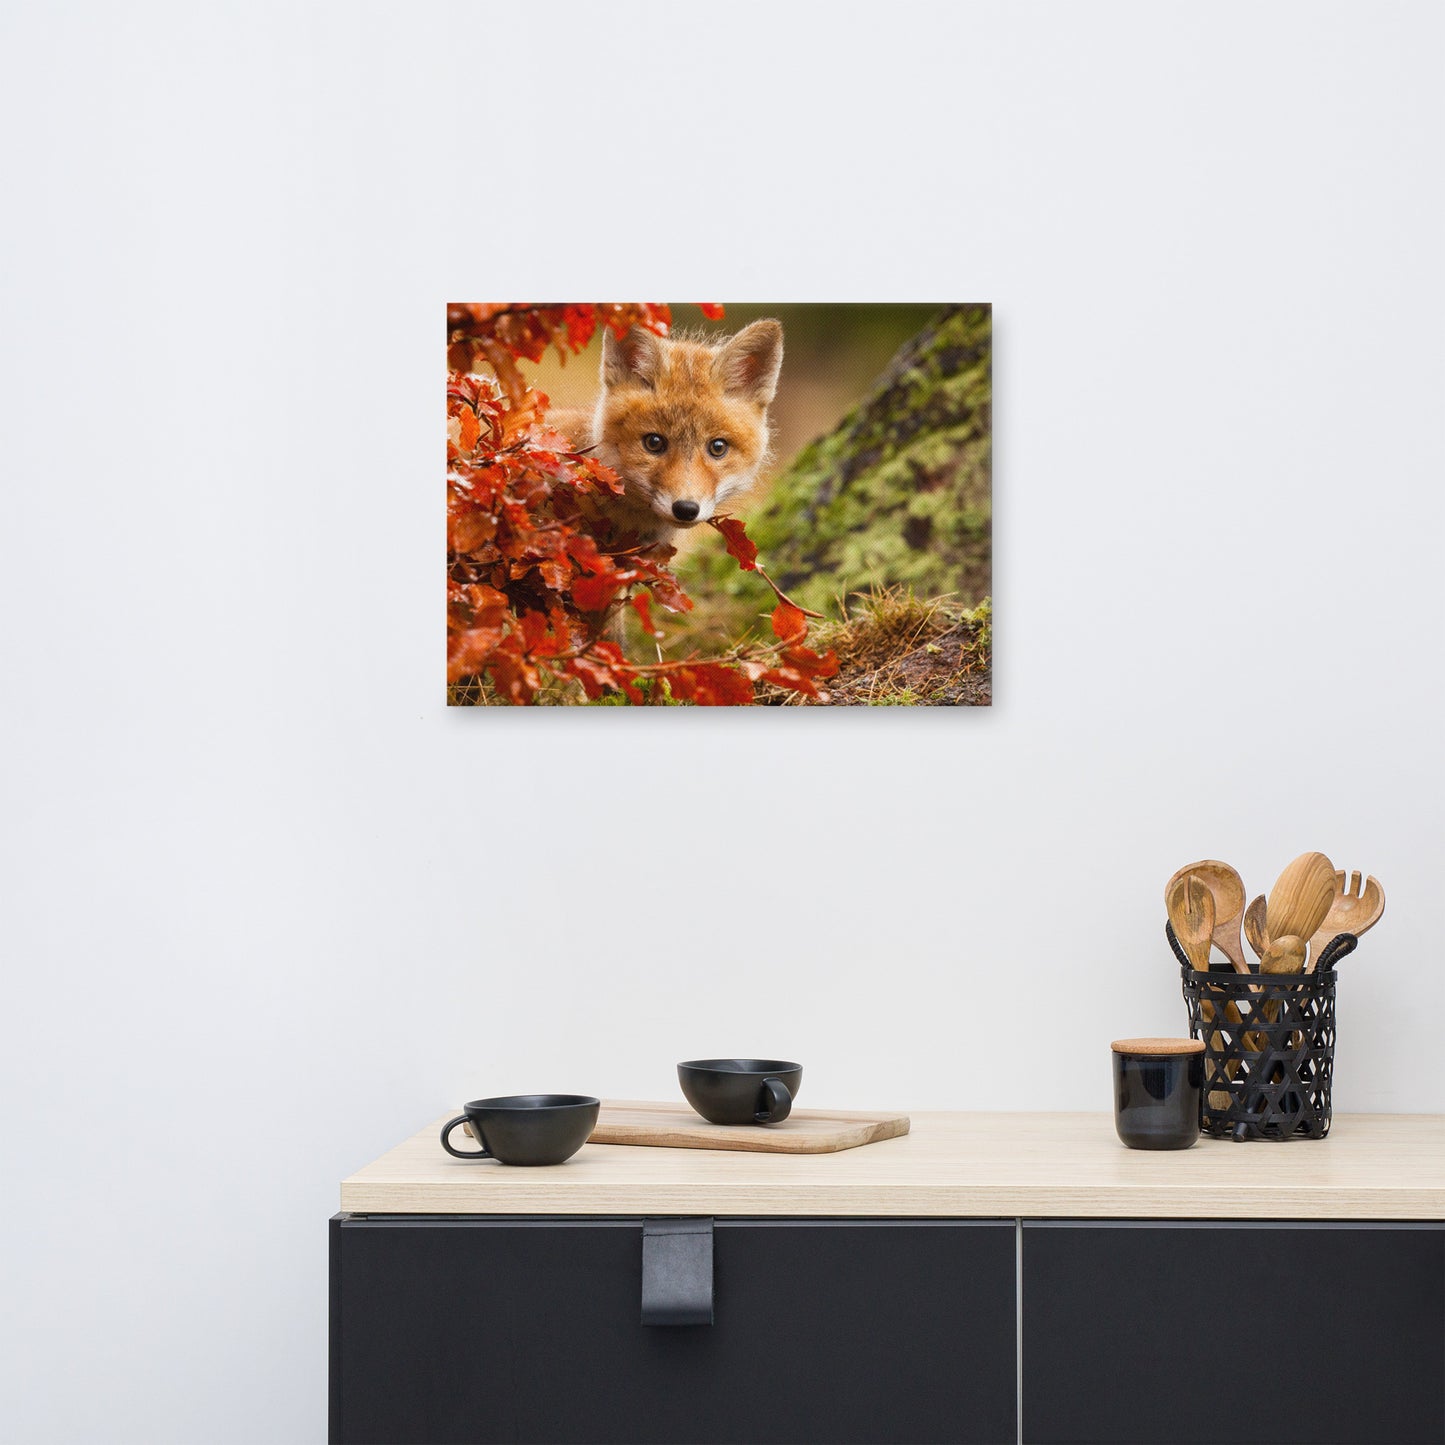 Canvas Nursery Decor: Peek-A-Boo Baby Fox Pup And Fall Leaves - Animal / Wildlife / Nature Photograph Canvas Artwork - Wall Decor